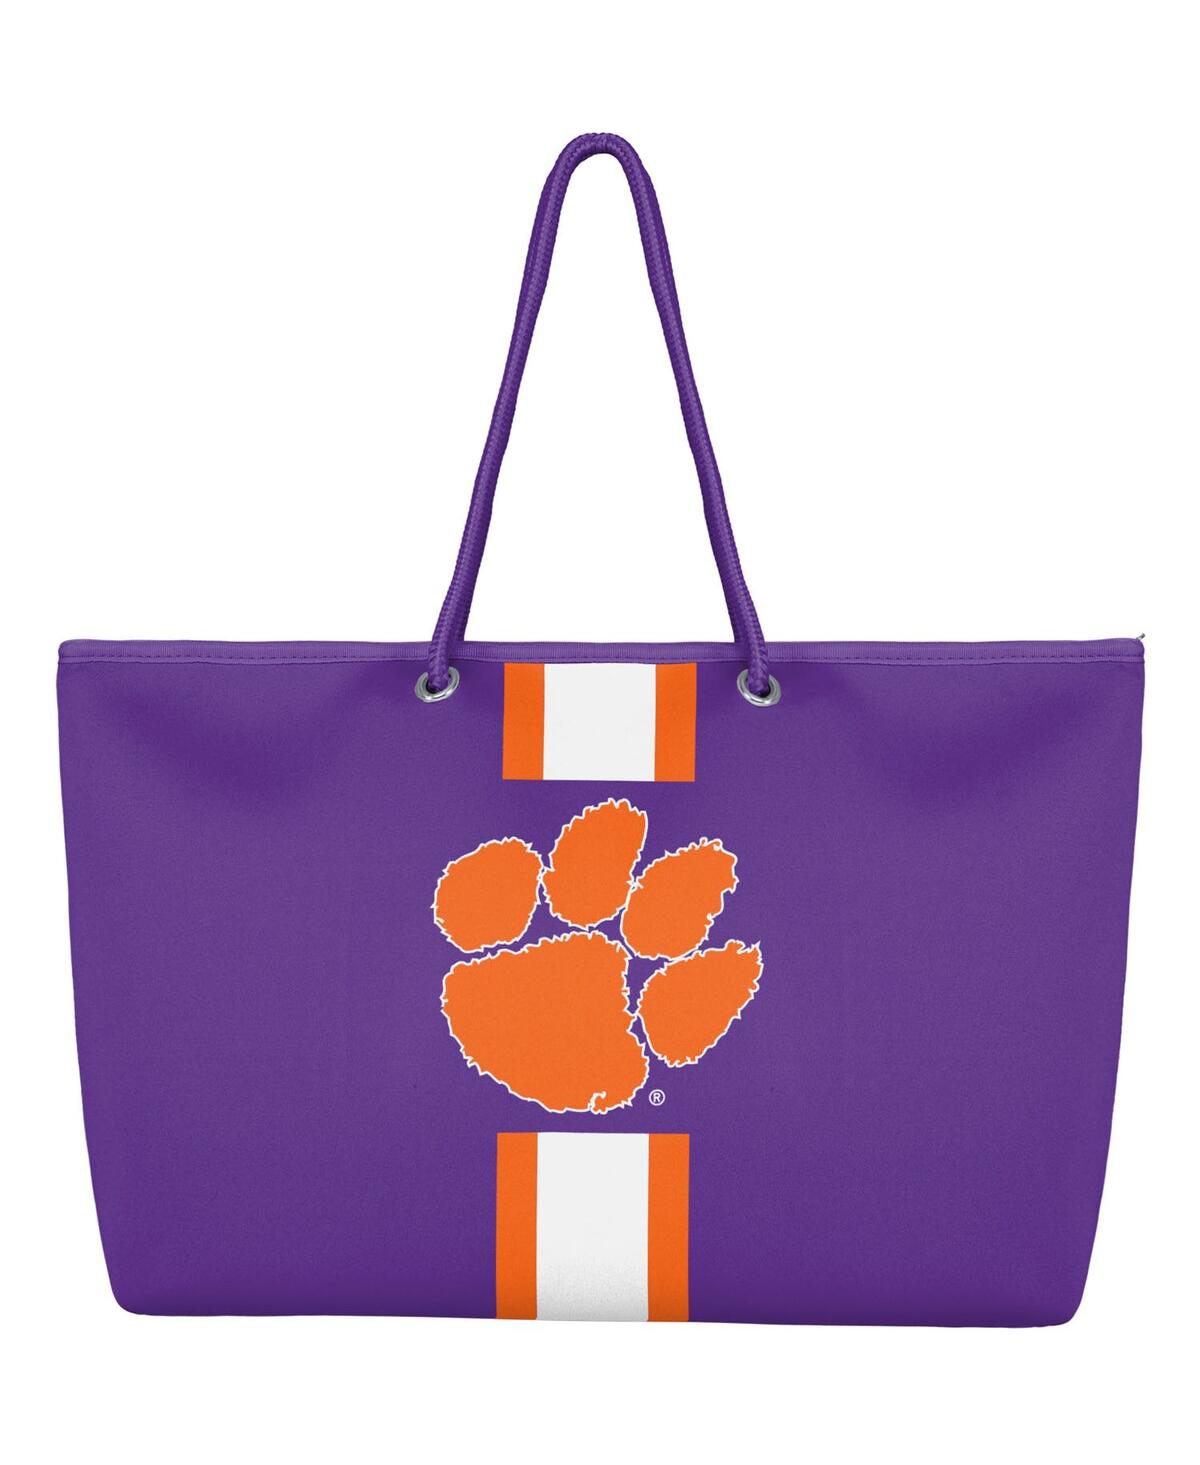 Clemson Tigers Tote Bag - Orange